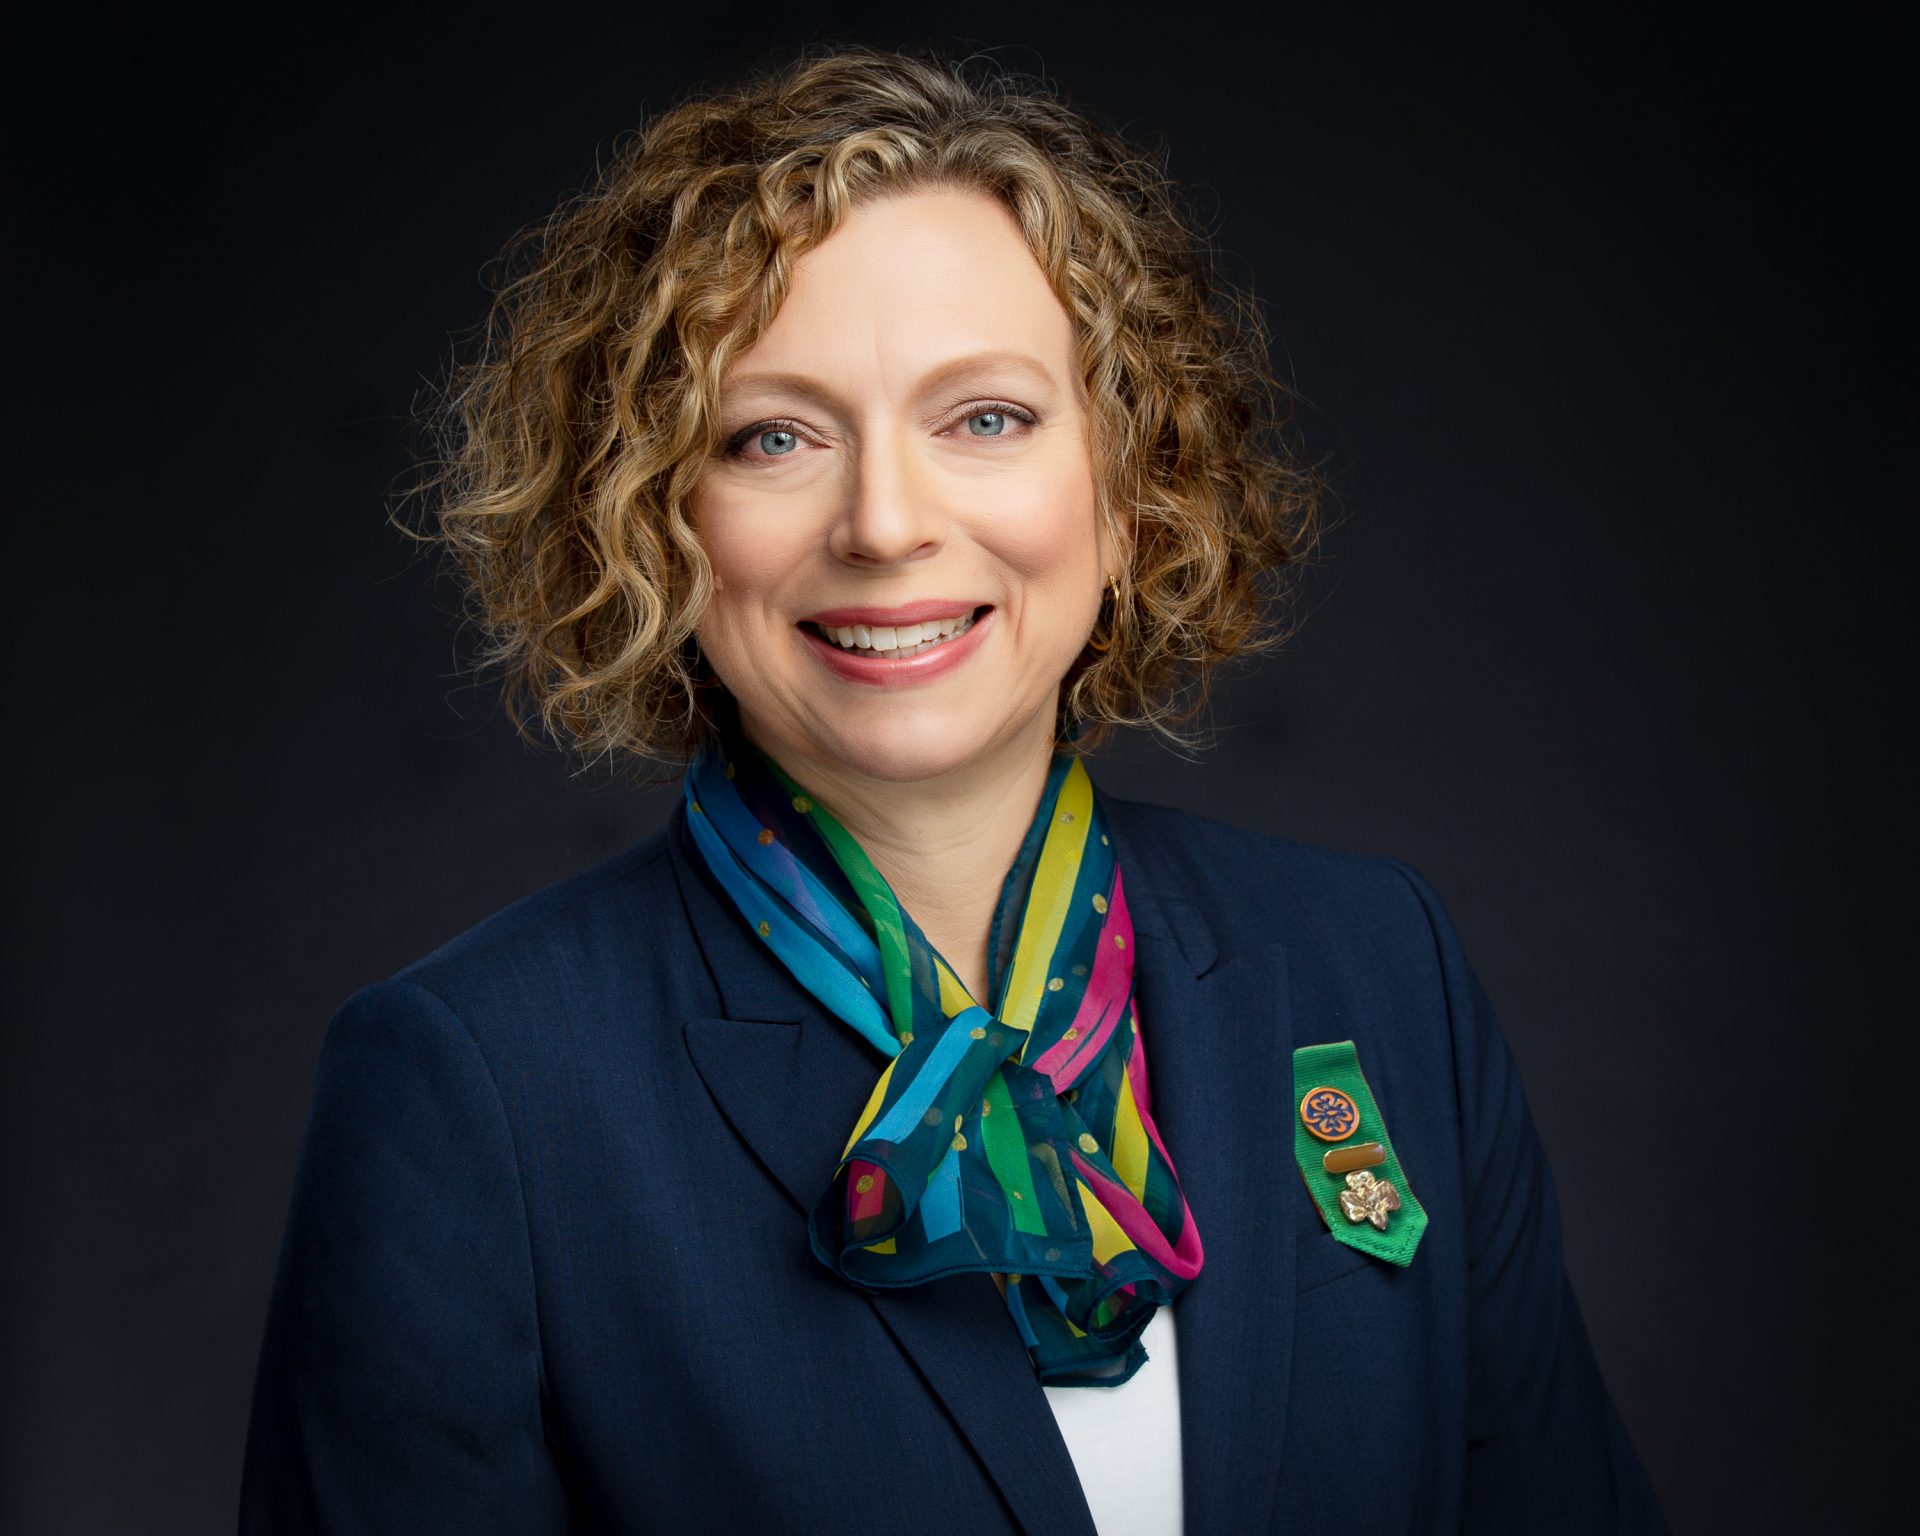 Headshot of CEO Paula Bookitis wearing navy blazer and colorful scarf